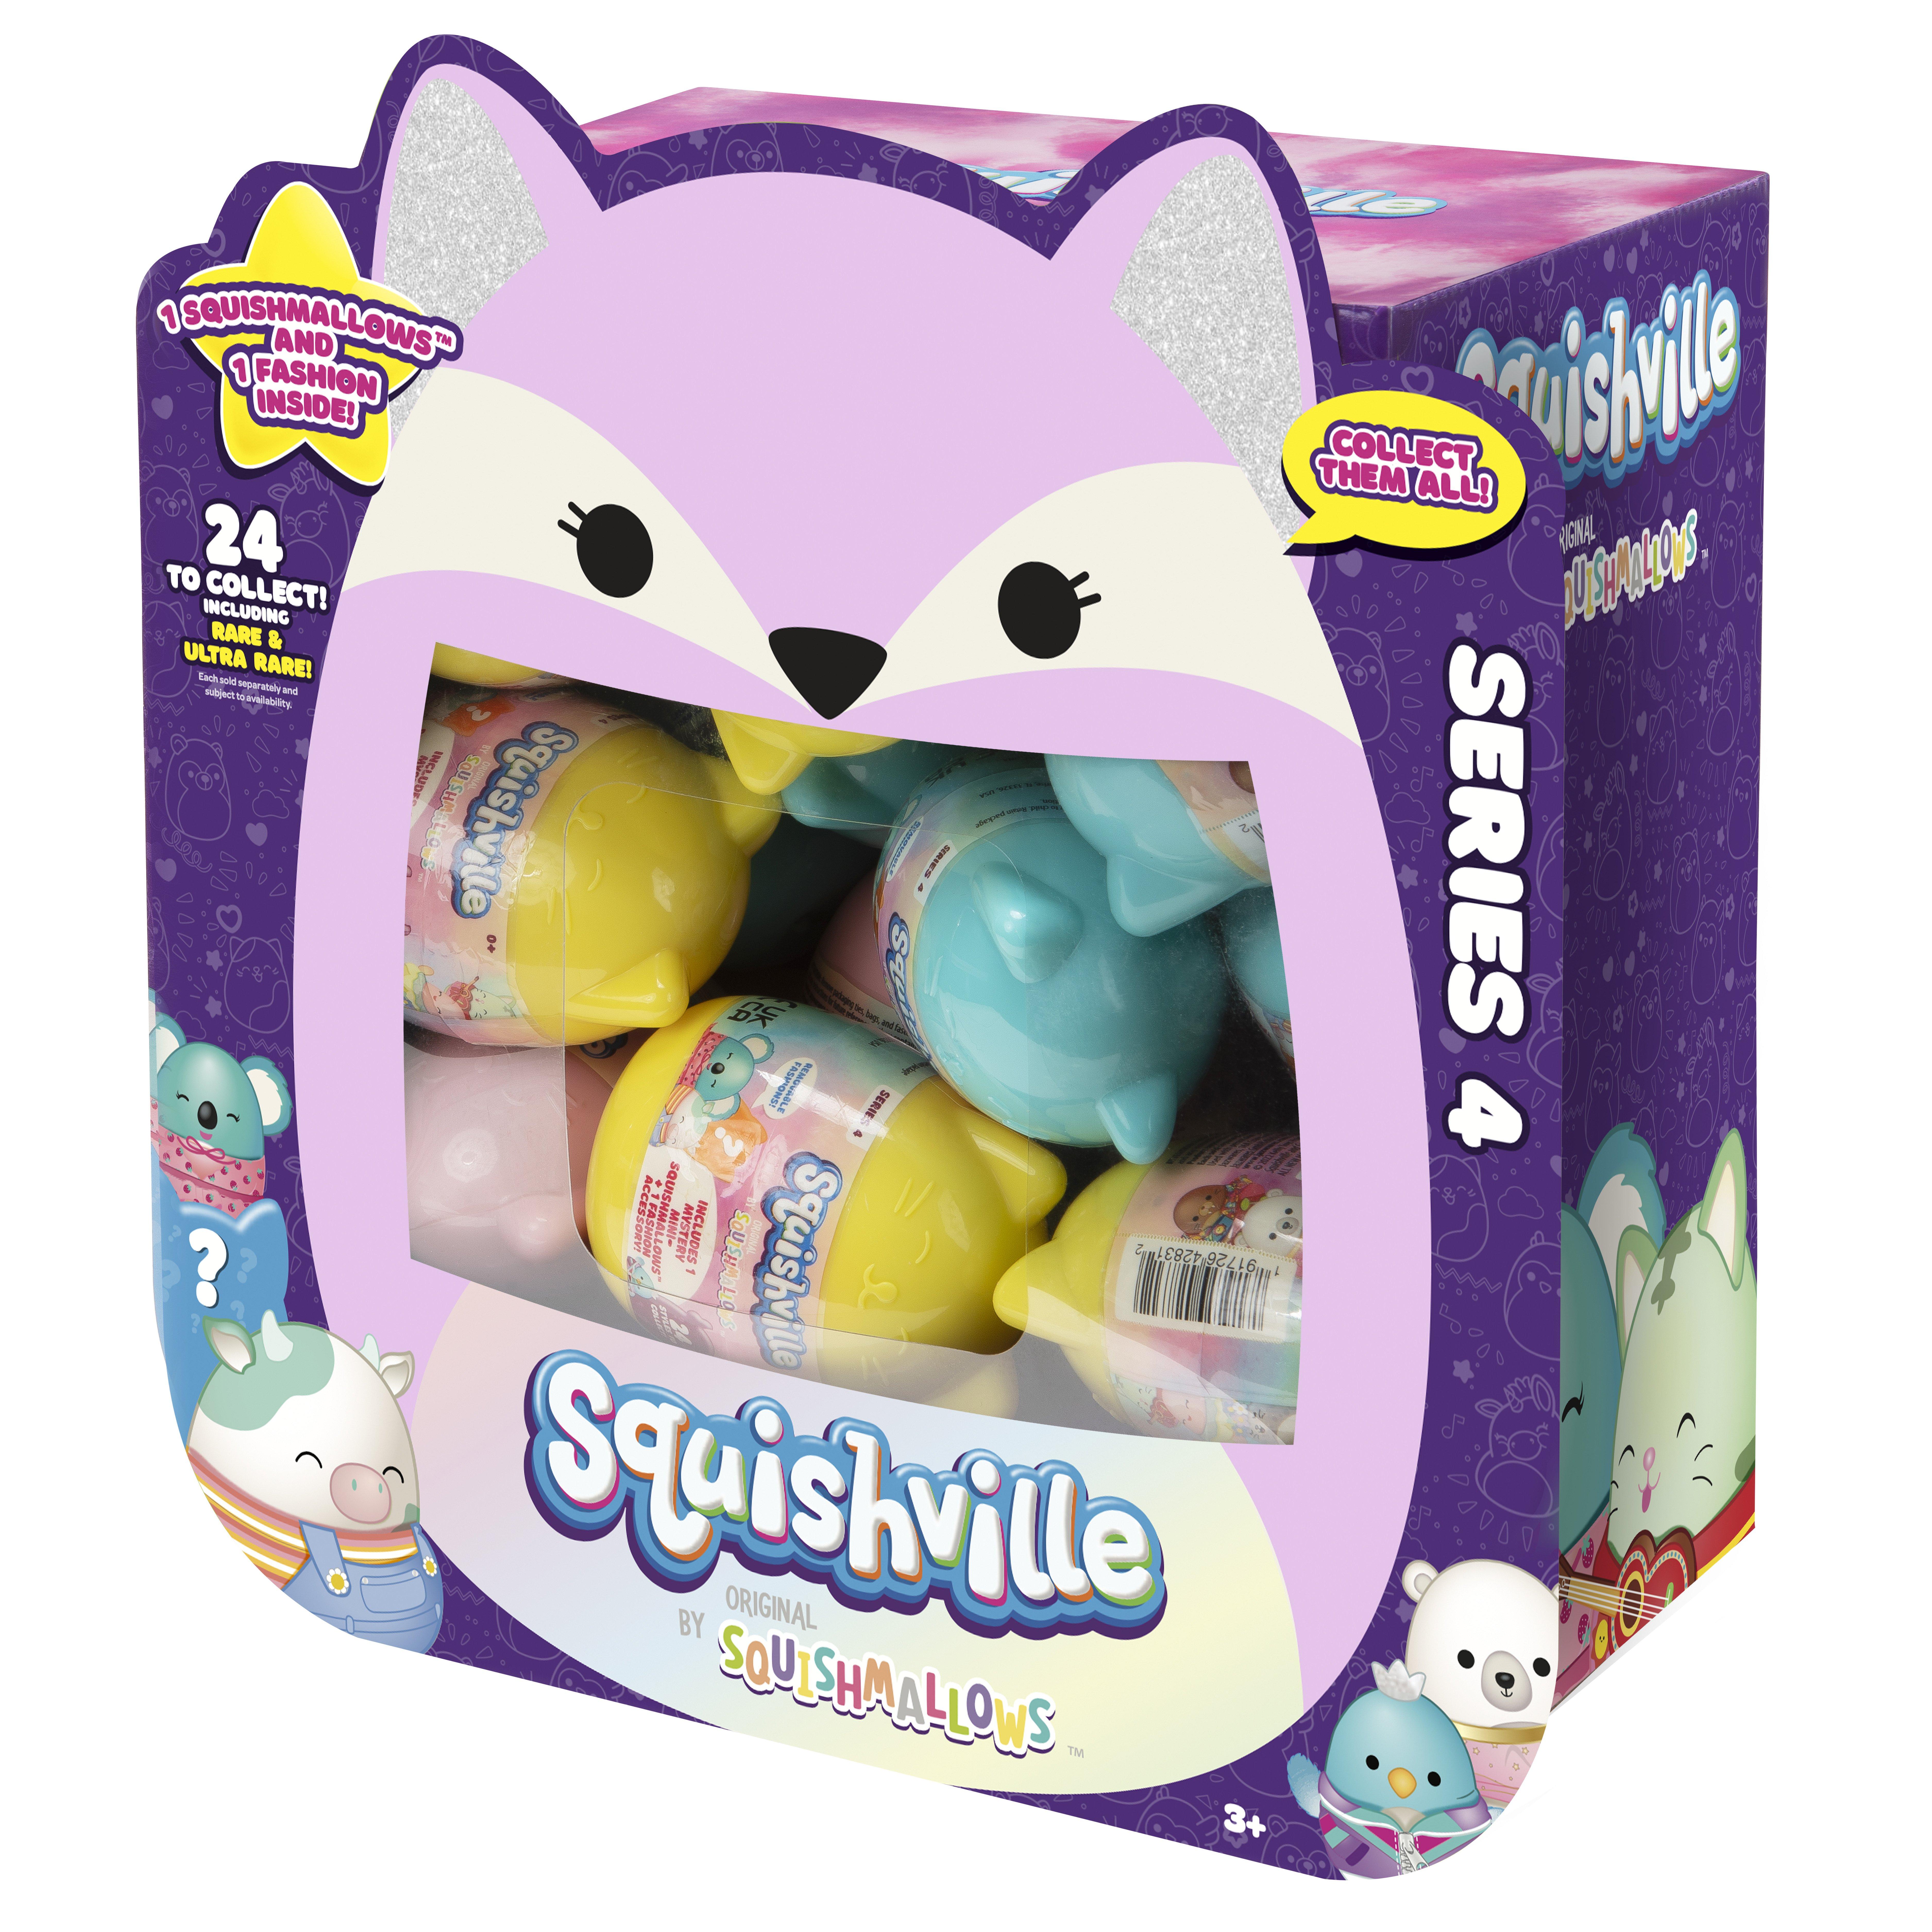 https://media.gamestop.com/i/gamestop/11162364_ALT01/Squishmallows-Squishville-Mystery-2-in-Mini-Plush-Series-4?$pdp$